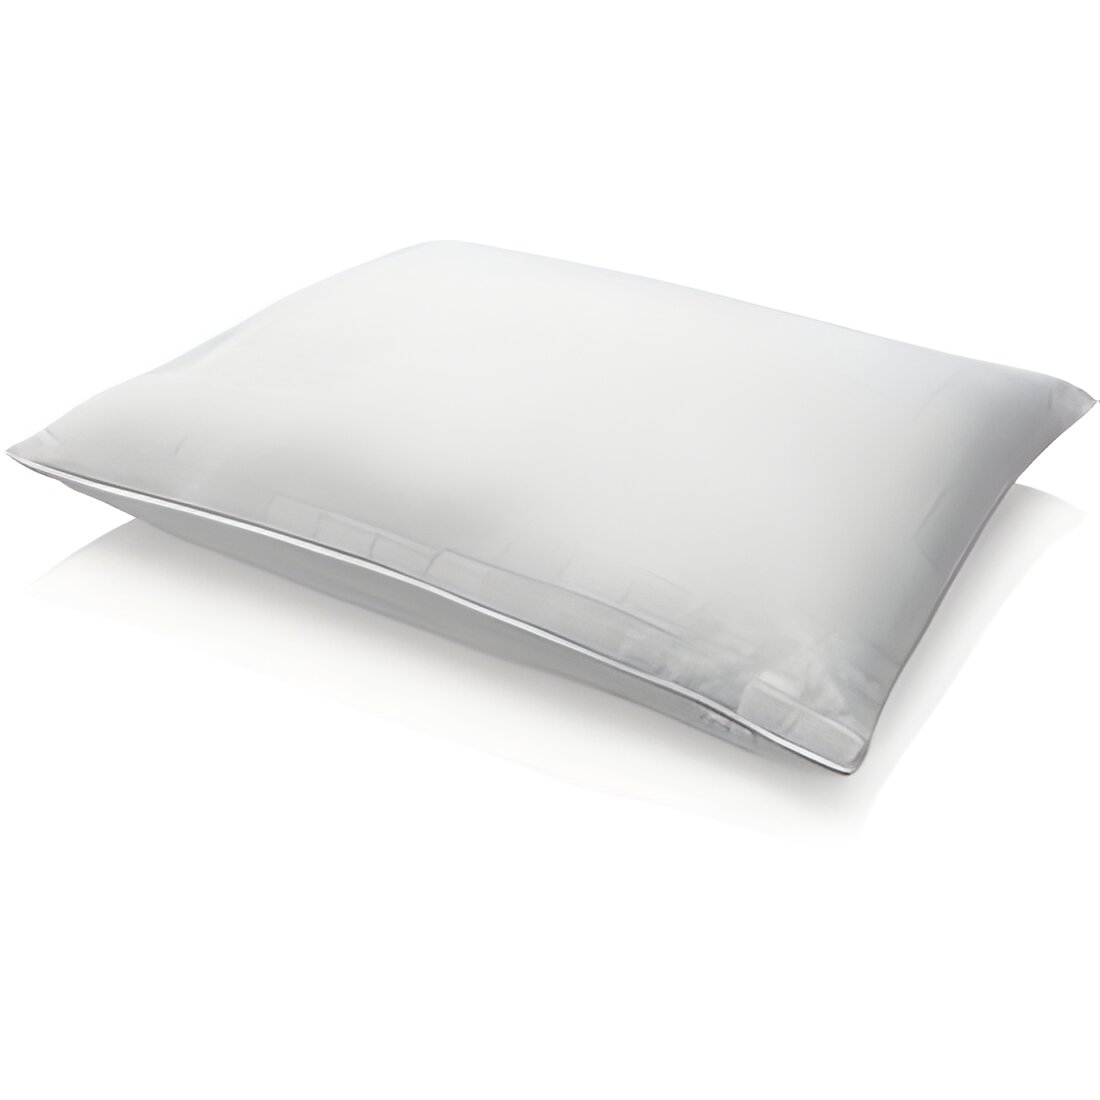 Free Coropilo World's First Smart Pillow